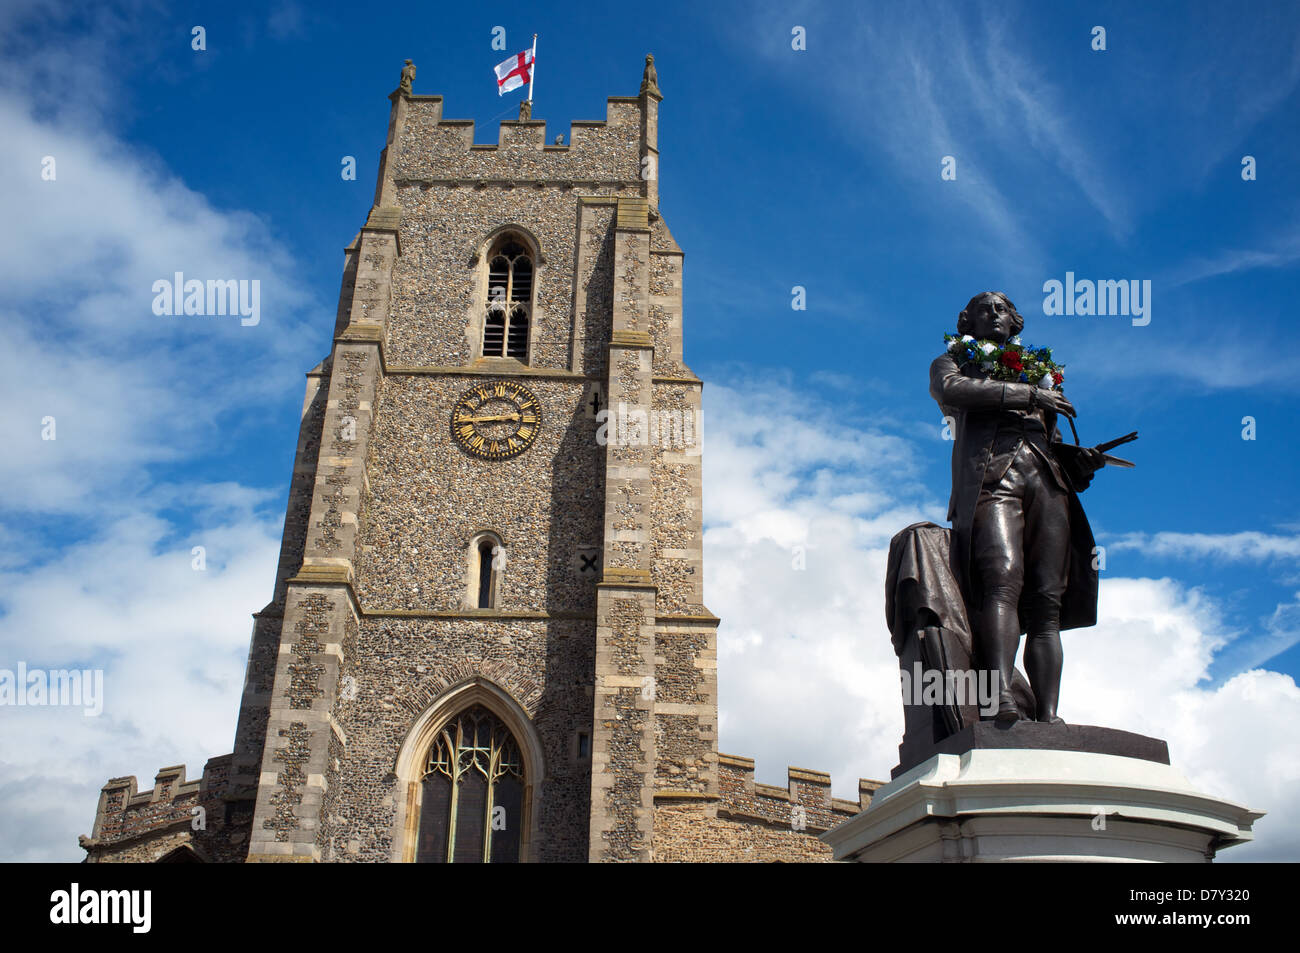 Thomas Gainsborough statue, Sudbury, Suffolk, UK. Banque D'Images